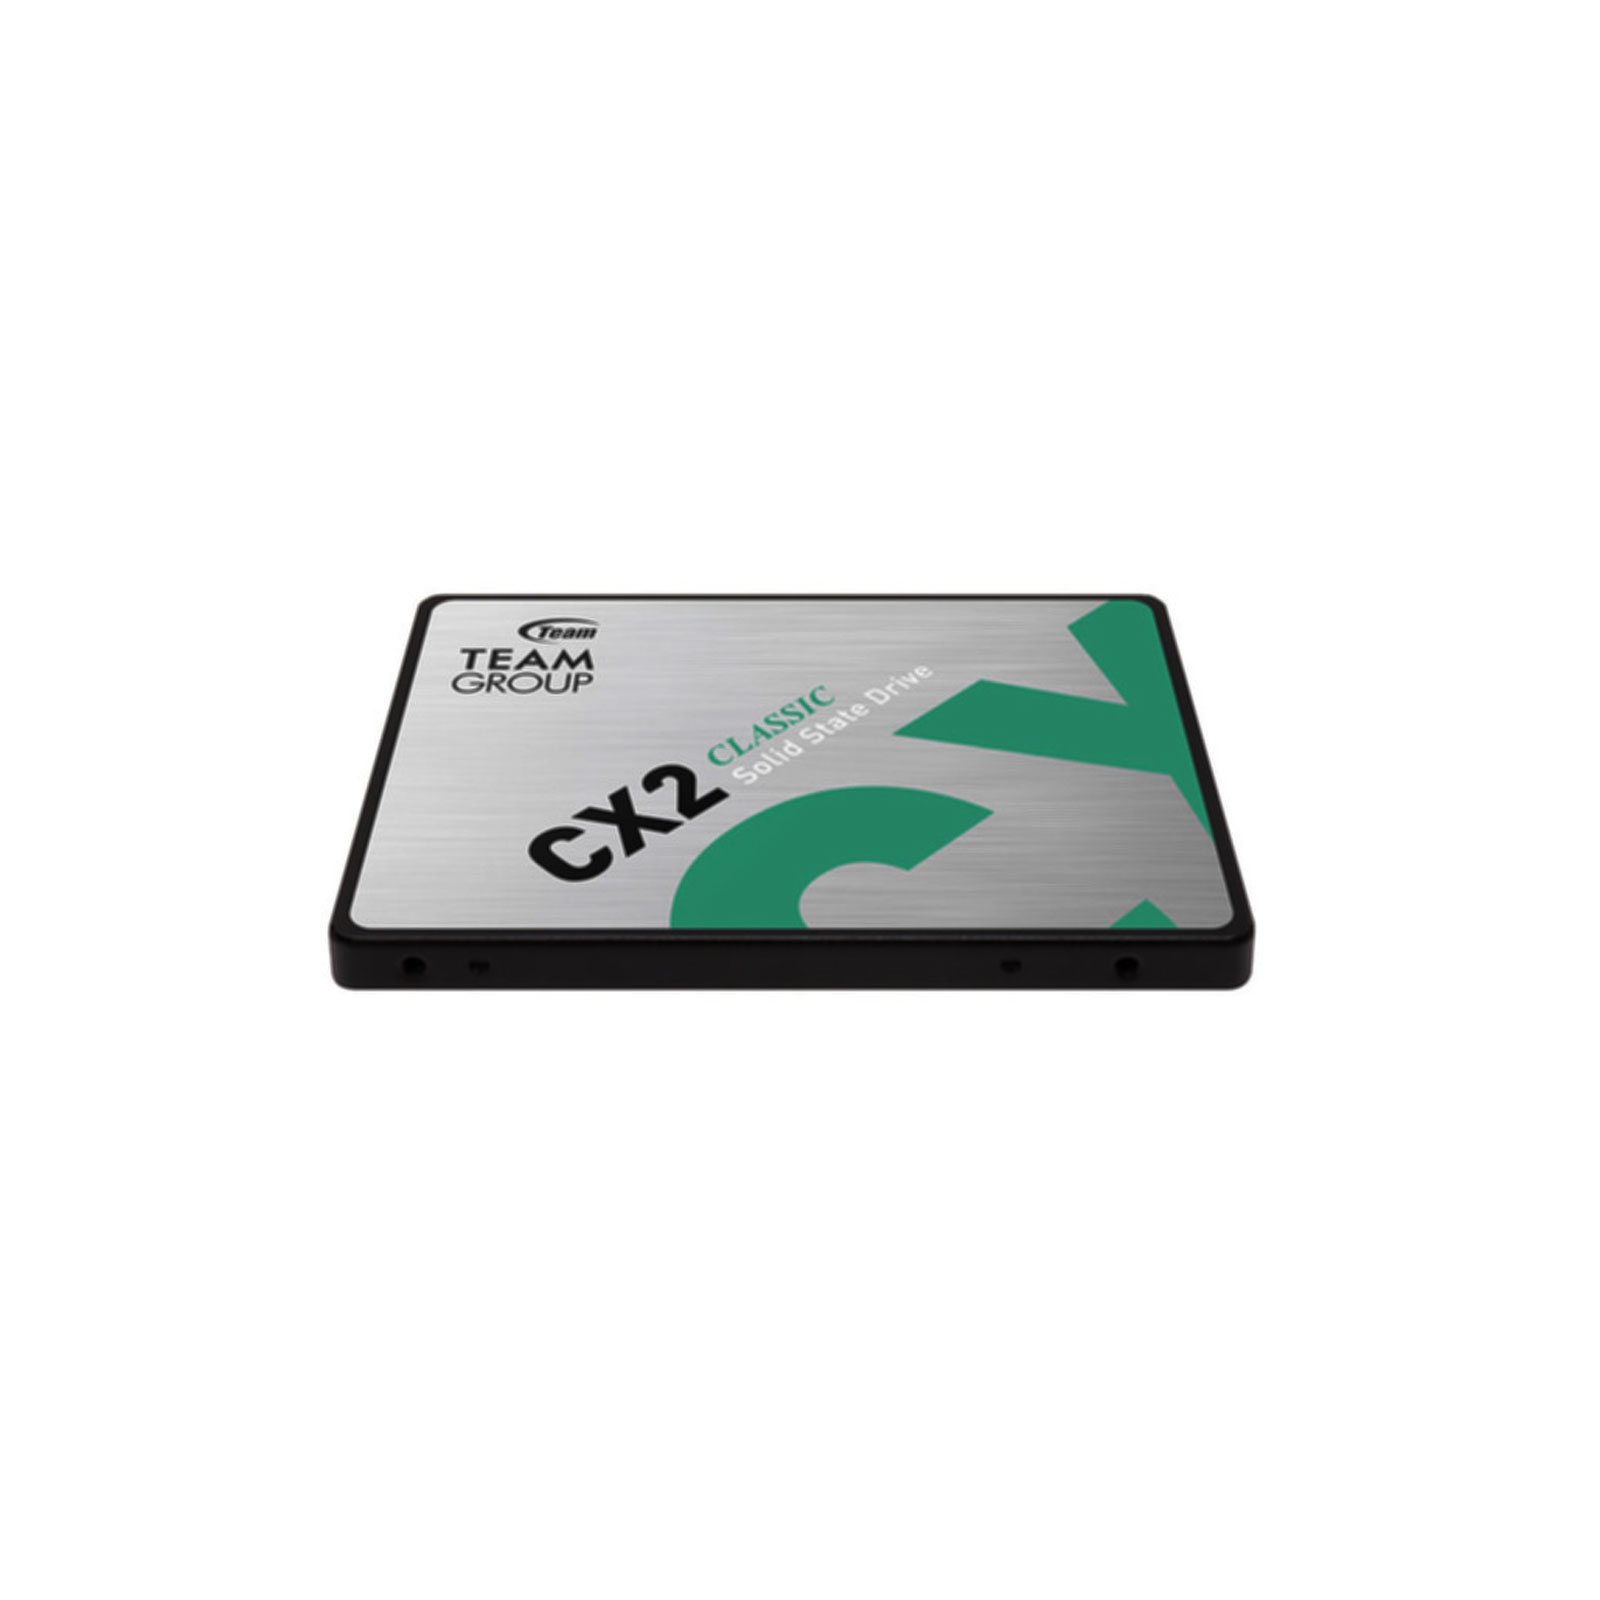 Teamgroup 1TB CX2 Sata3 2,5" 7mm T253X6001T0C101 Interne SSD-Festplatte